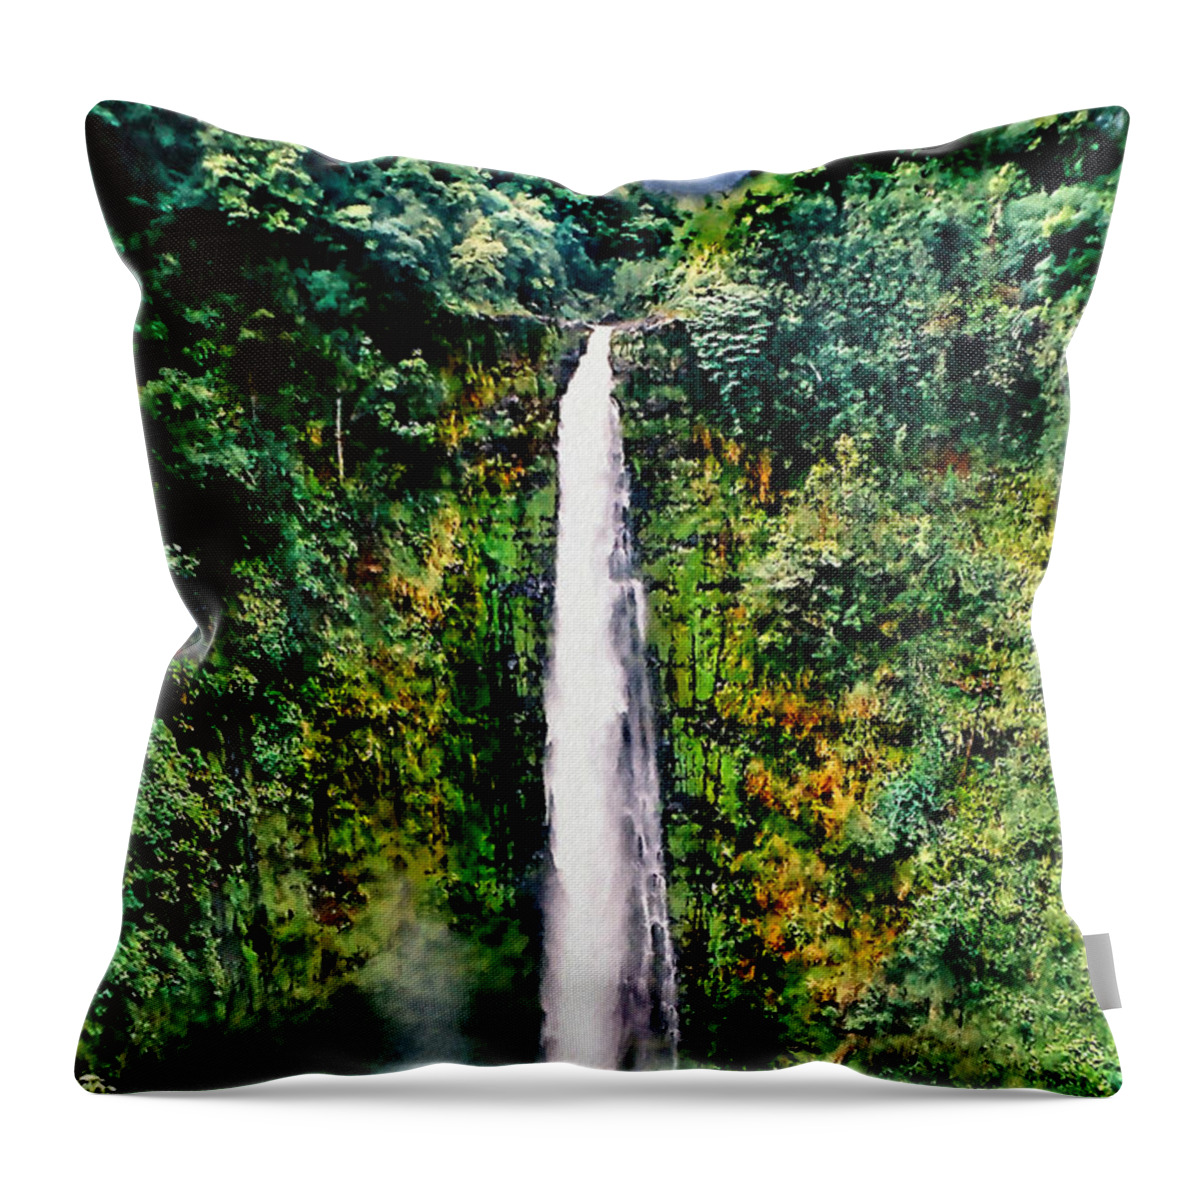 Hawaiian Waterfall Throw Pillow featuring the photograph Hawaiian Waterfall by Adam Olsen